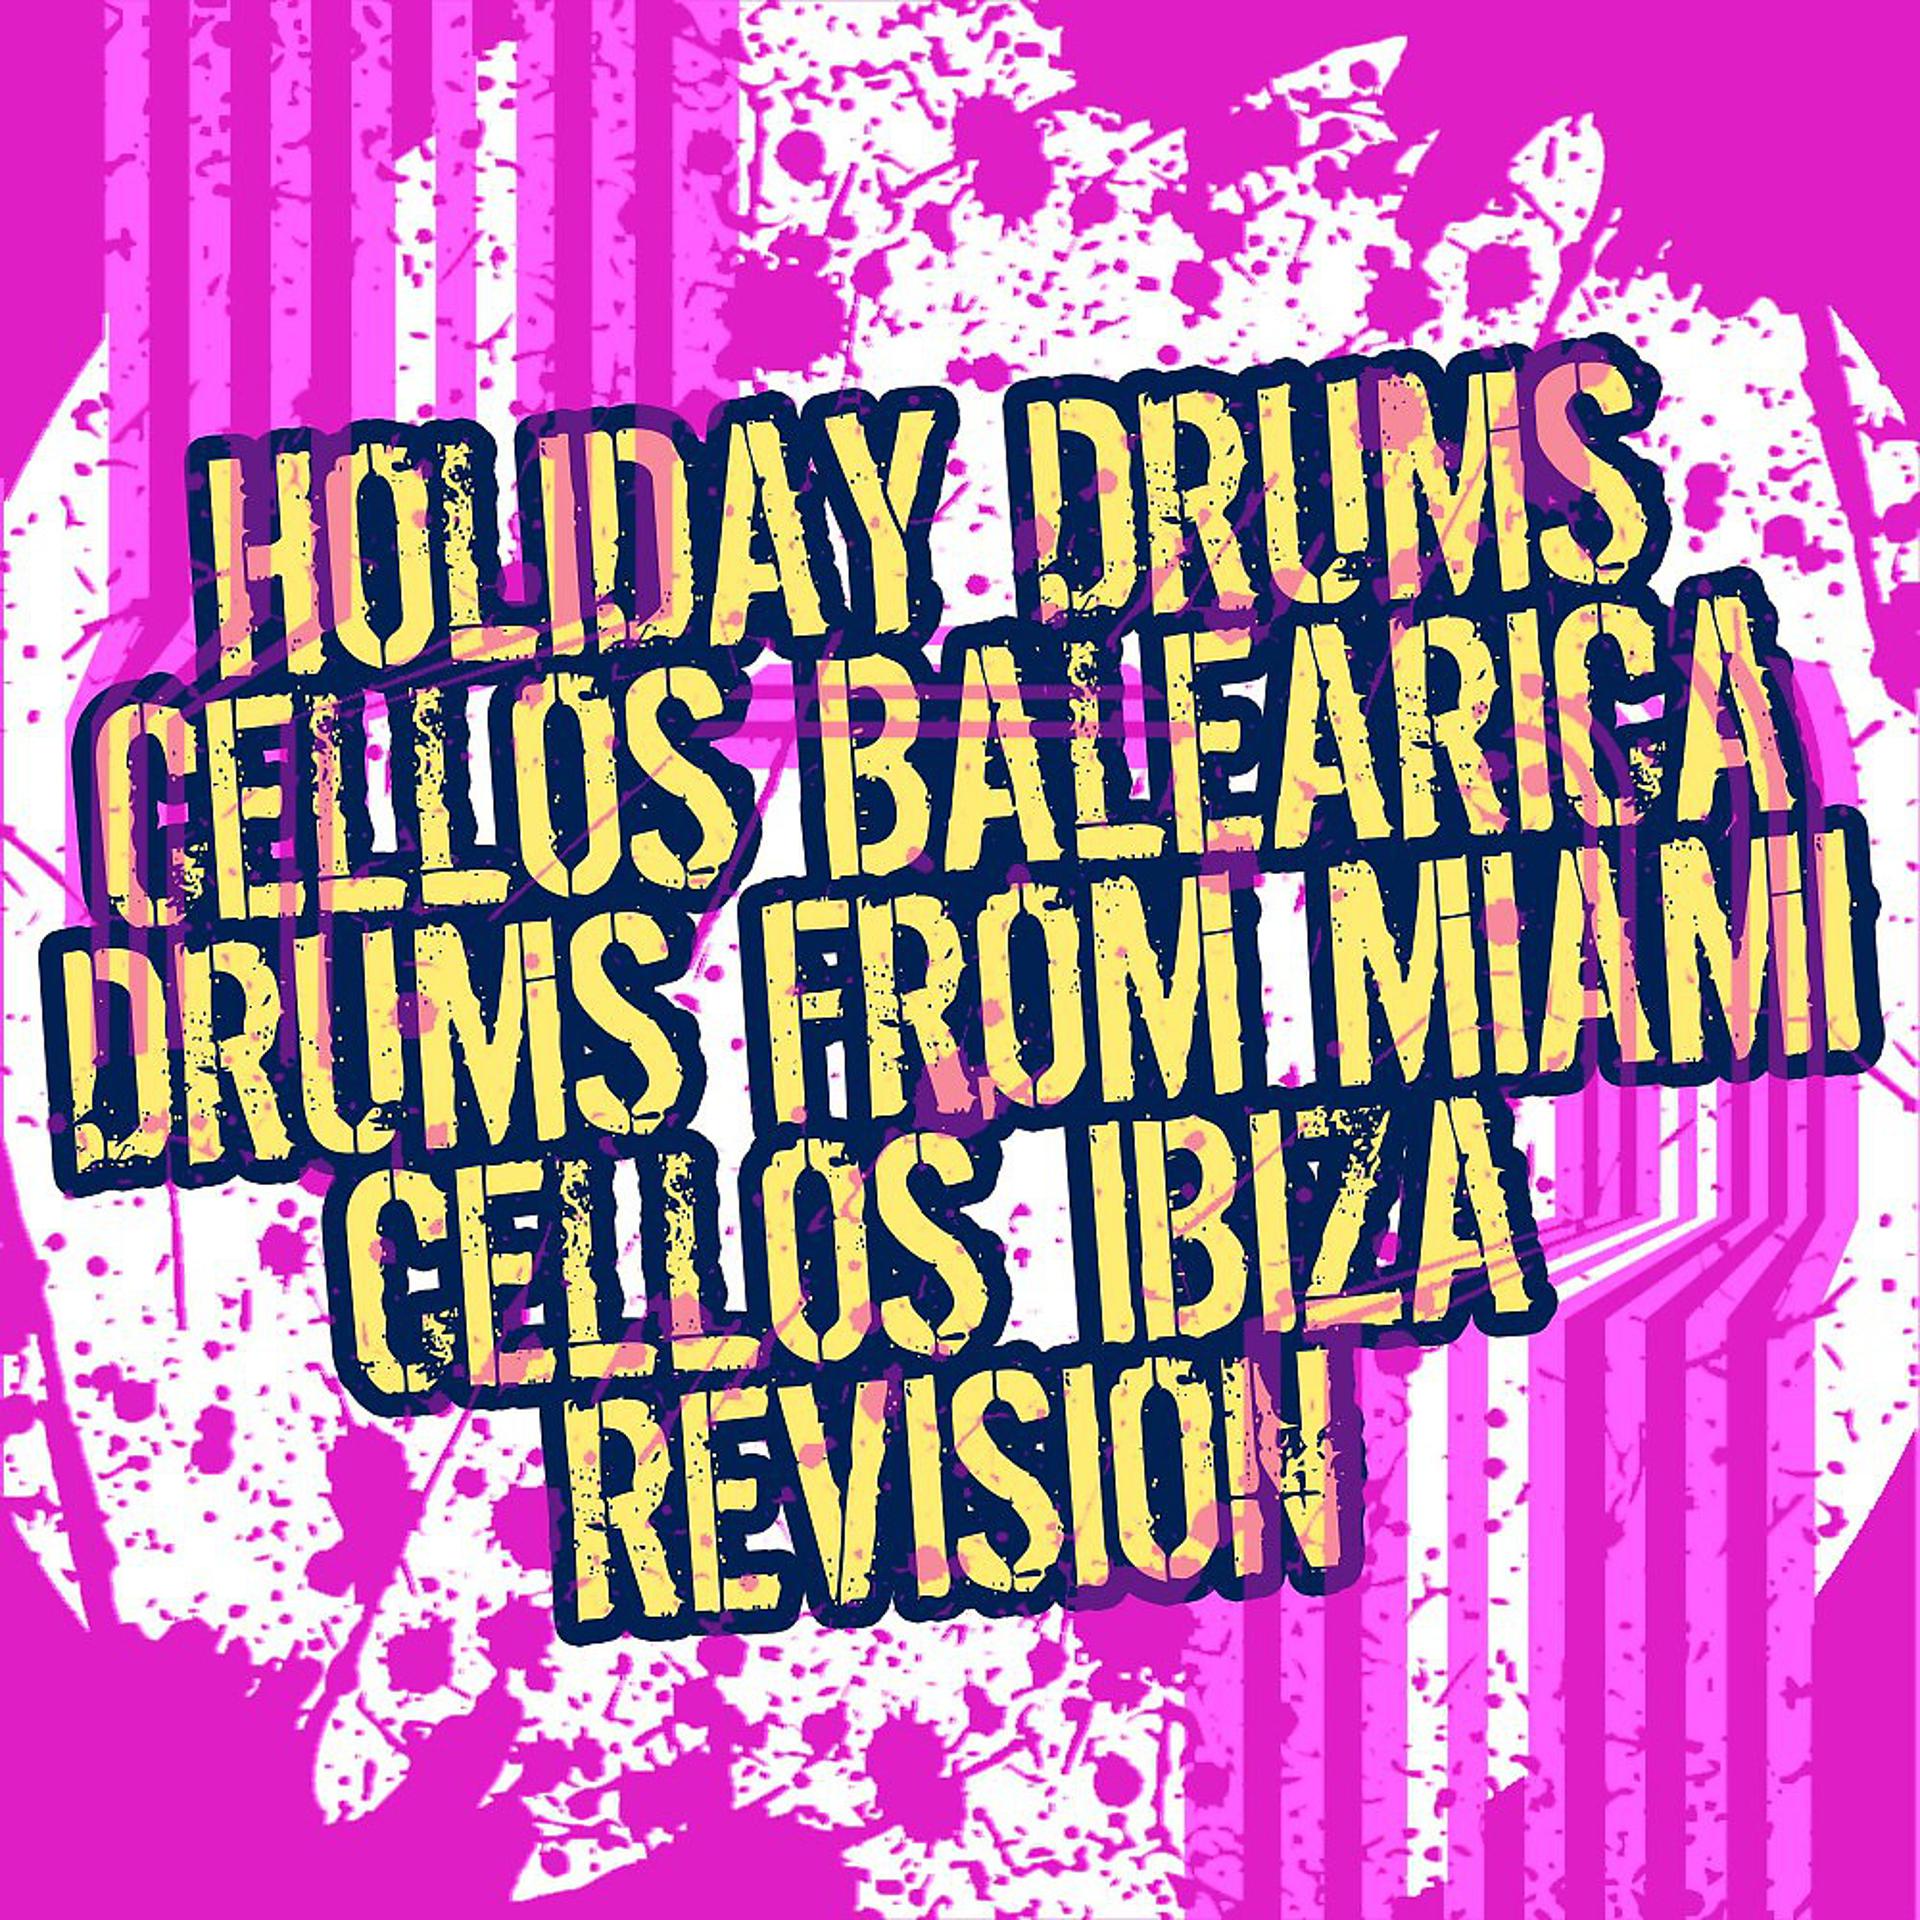 Постер альбома Drums from Miami (Cellos Ibiza Revision)